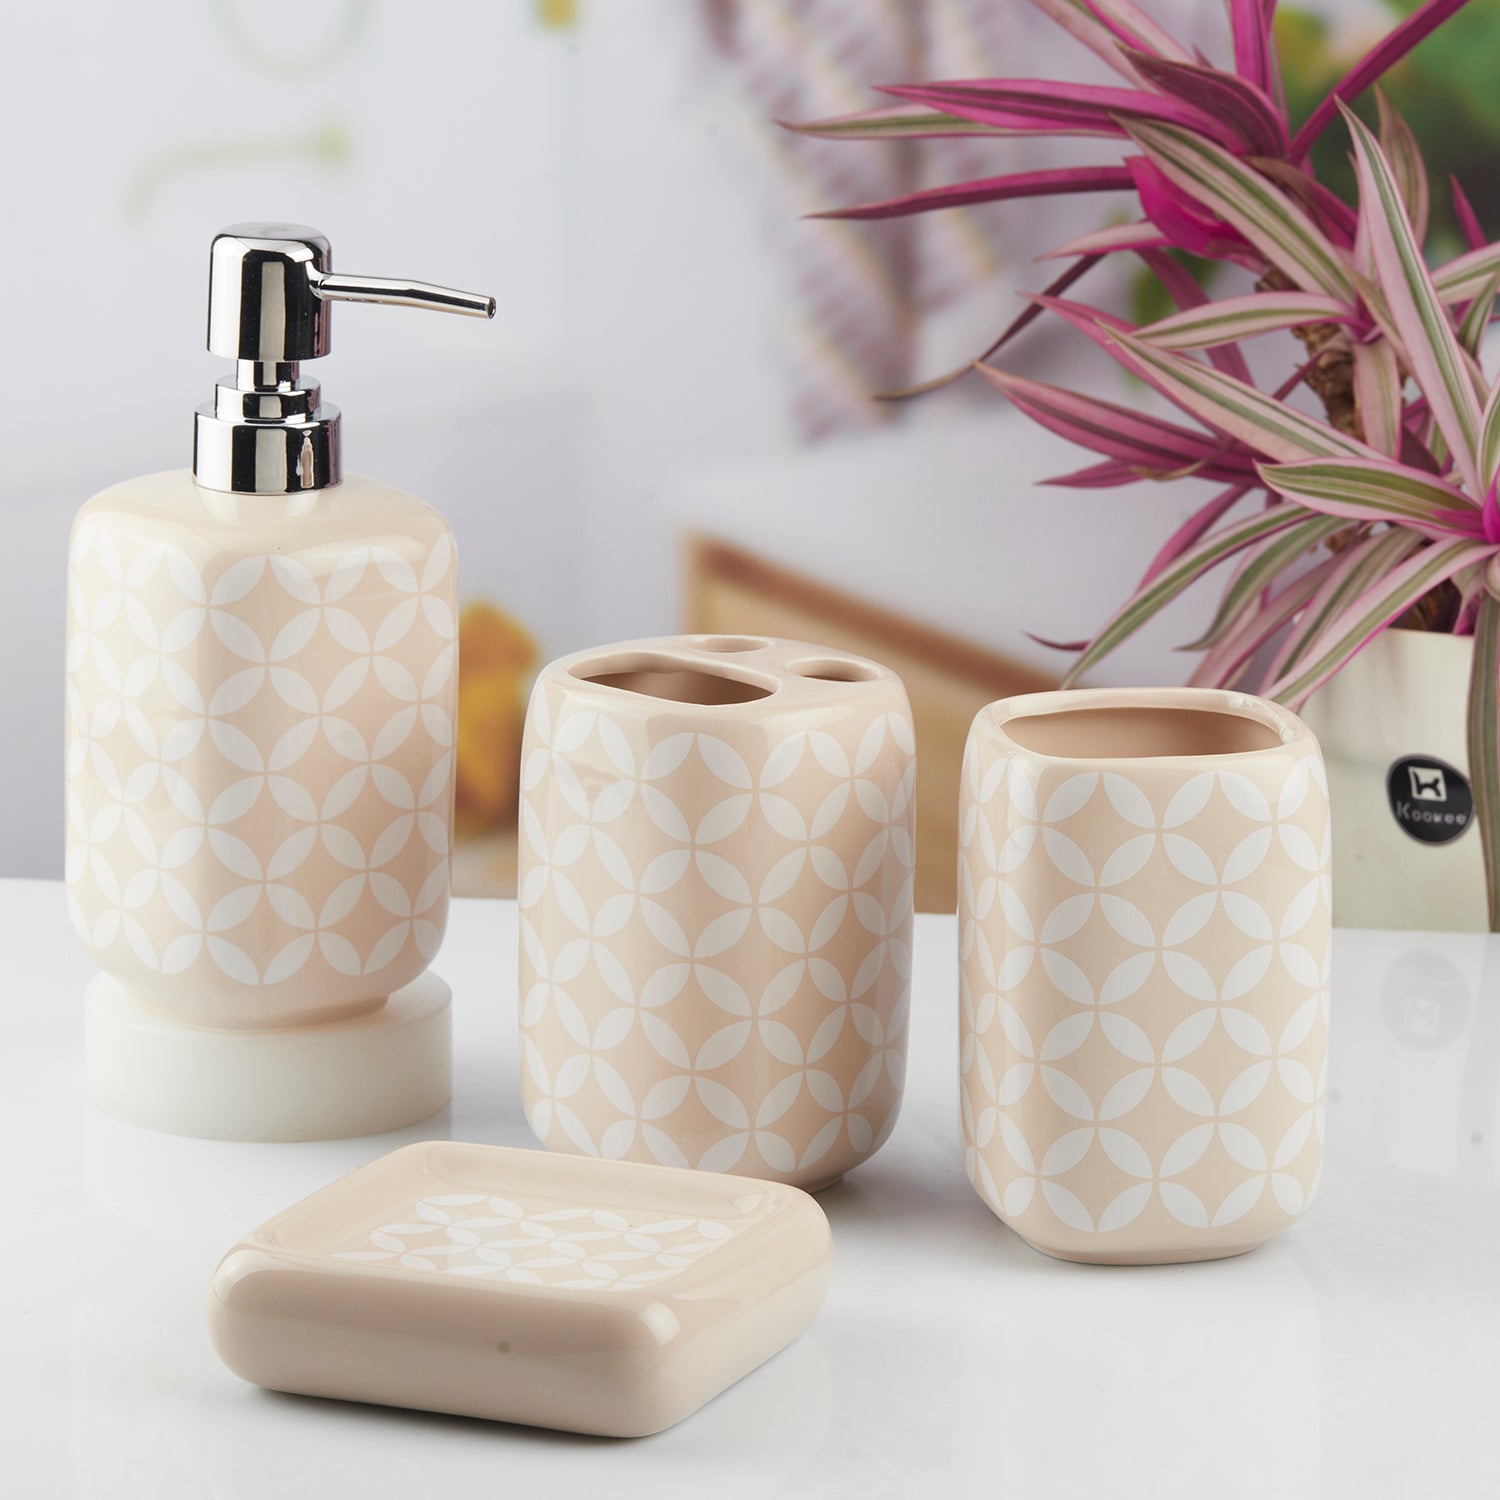 Ceramic Bathroom Set of 4 with Soap Dispenser (10454)